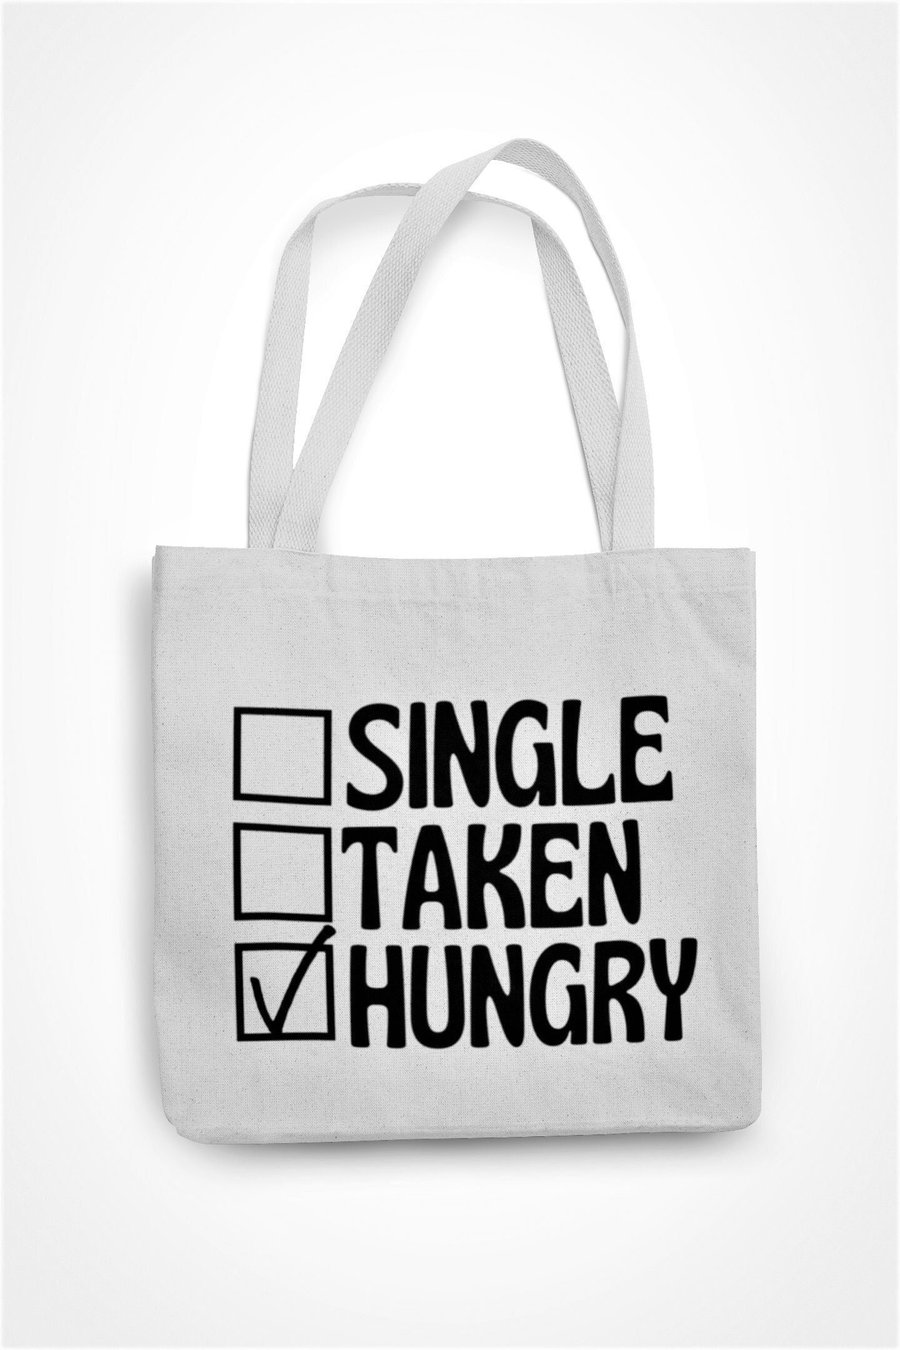 Single Taken Hungry Tote Bag Funny Food Lover Eco Shopping Bag Gift Present